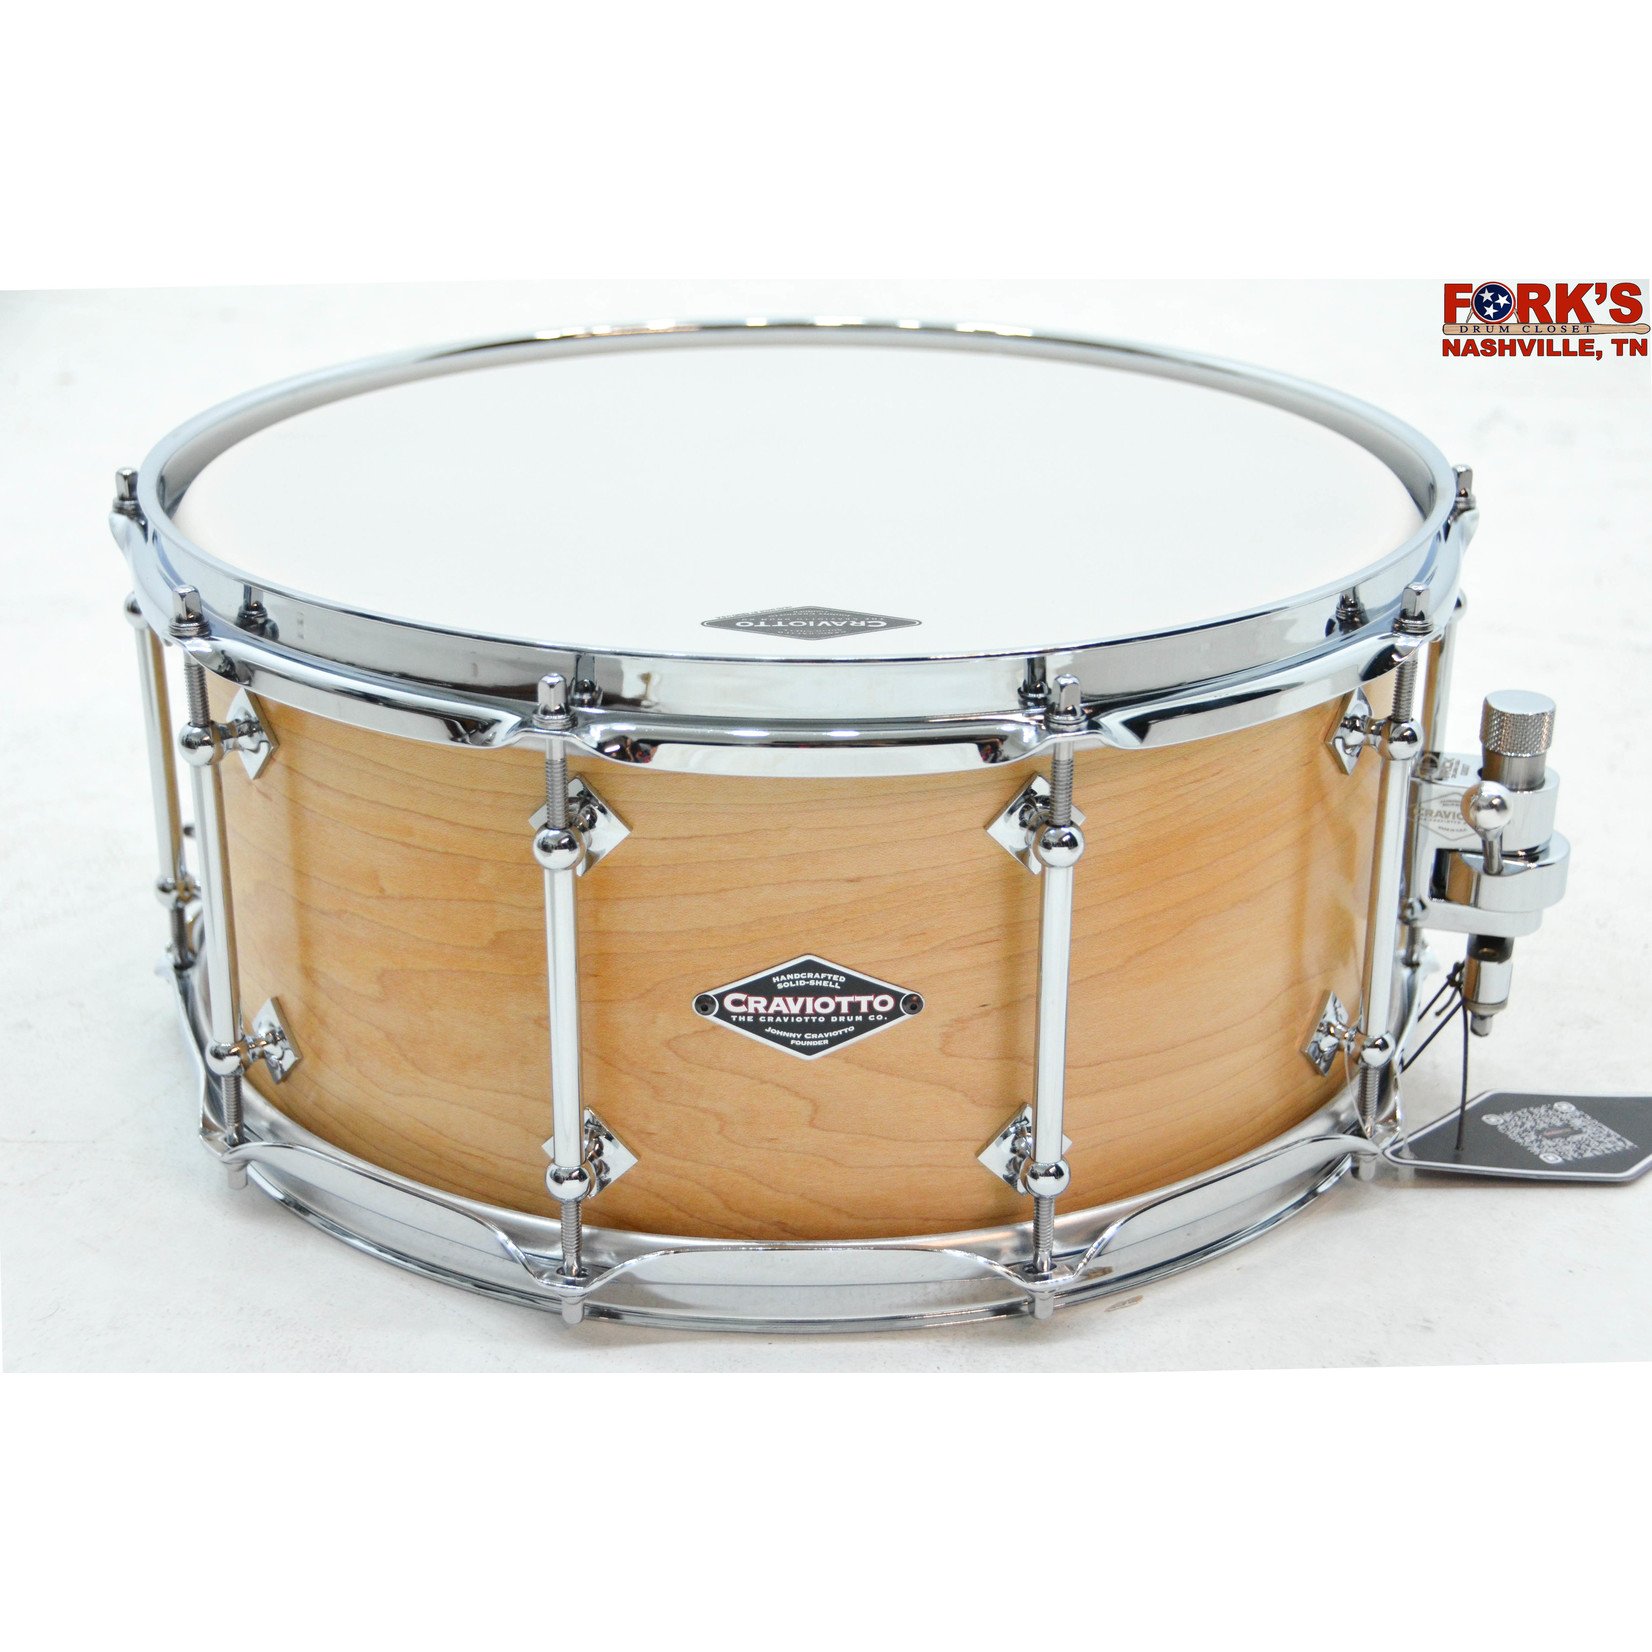 Craviotto Craviotto Custom Shop 6.5 x14 Snare Drum - Maple